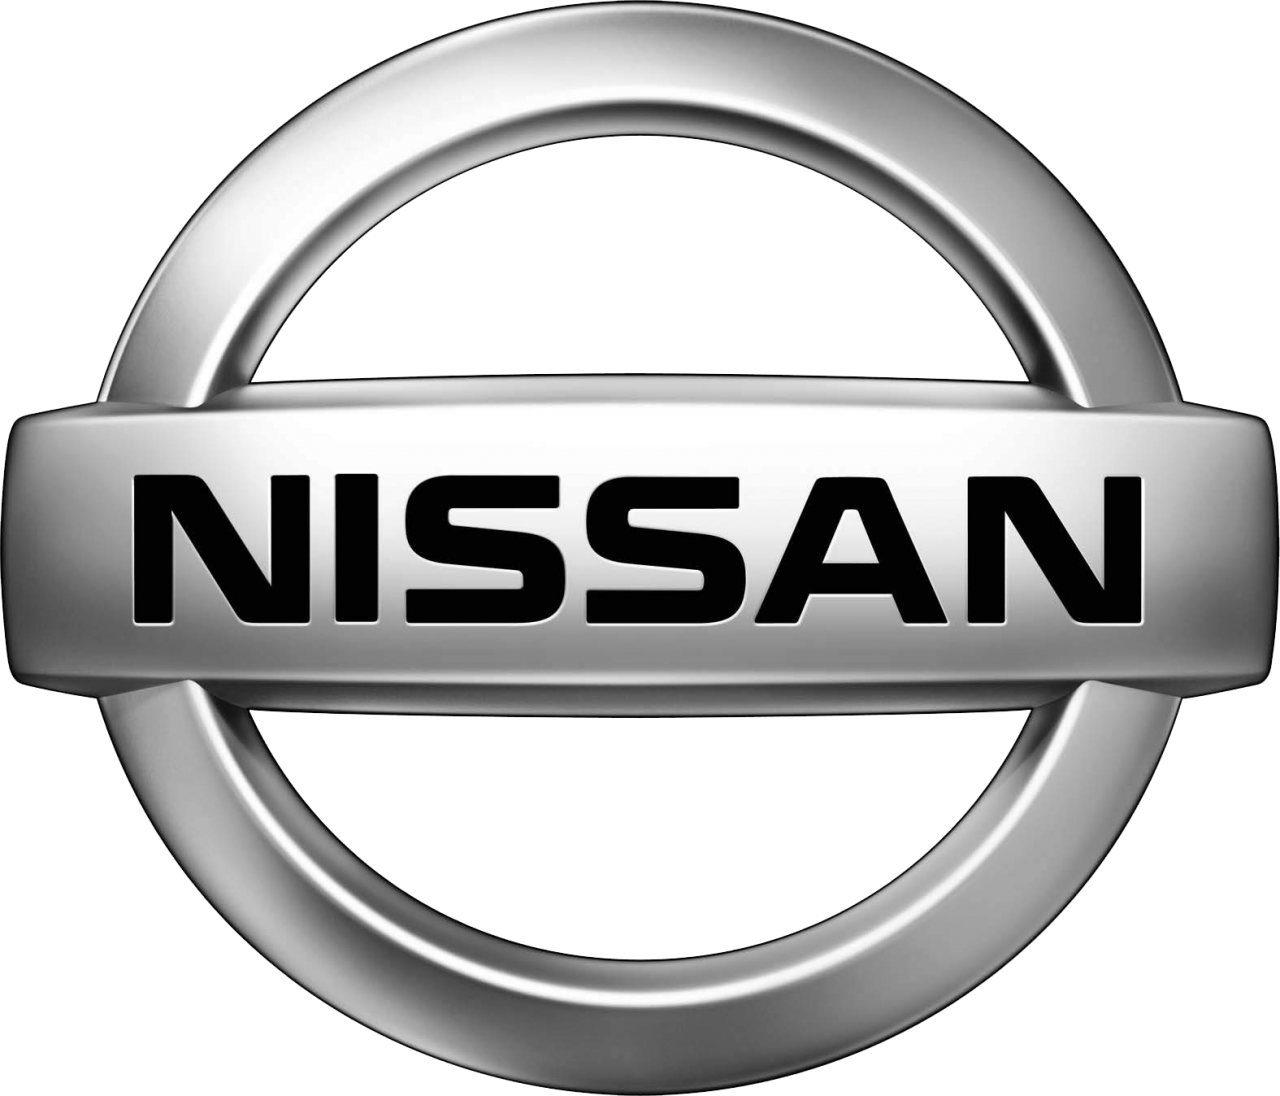 Nissan Logo PNG Image - PurePNG | Free transparent CC0 PNG Image Library